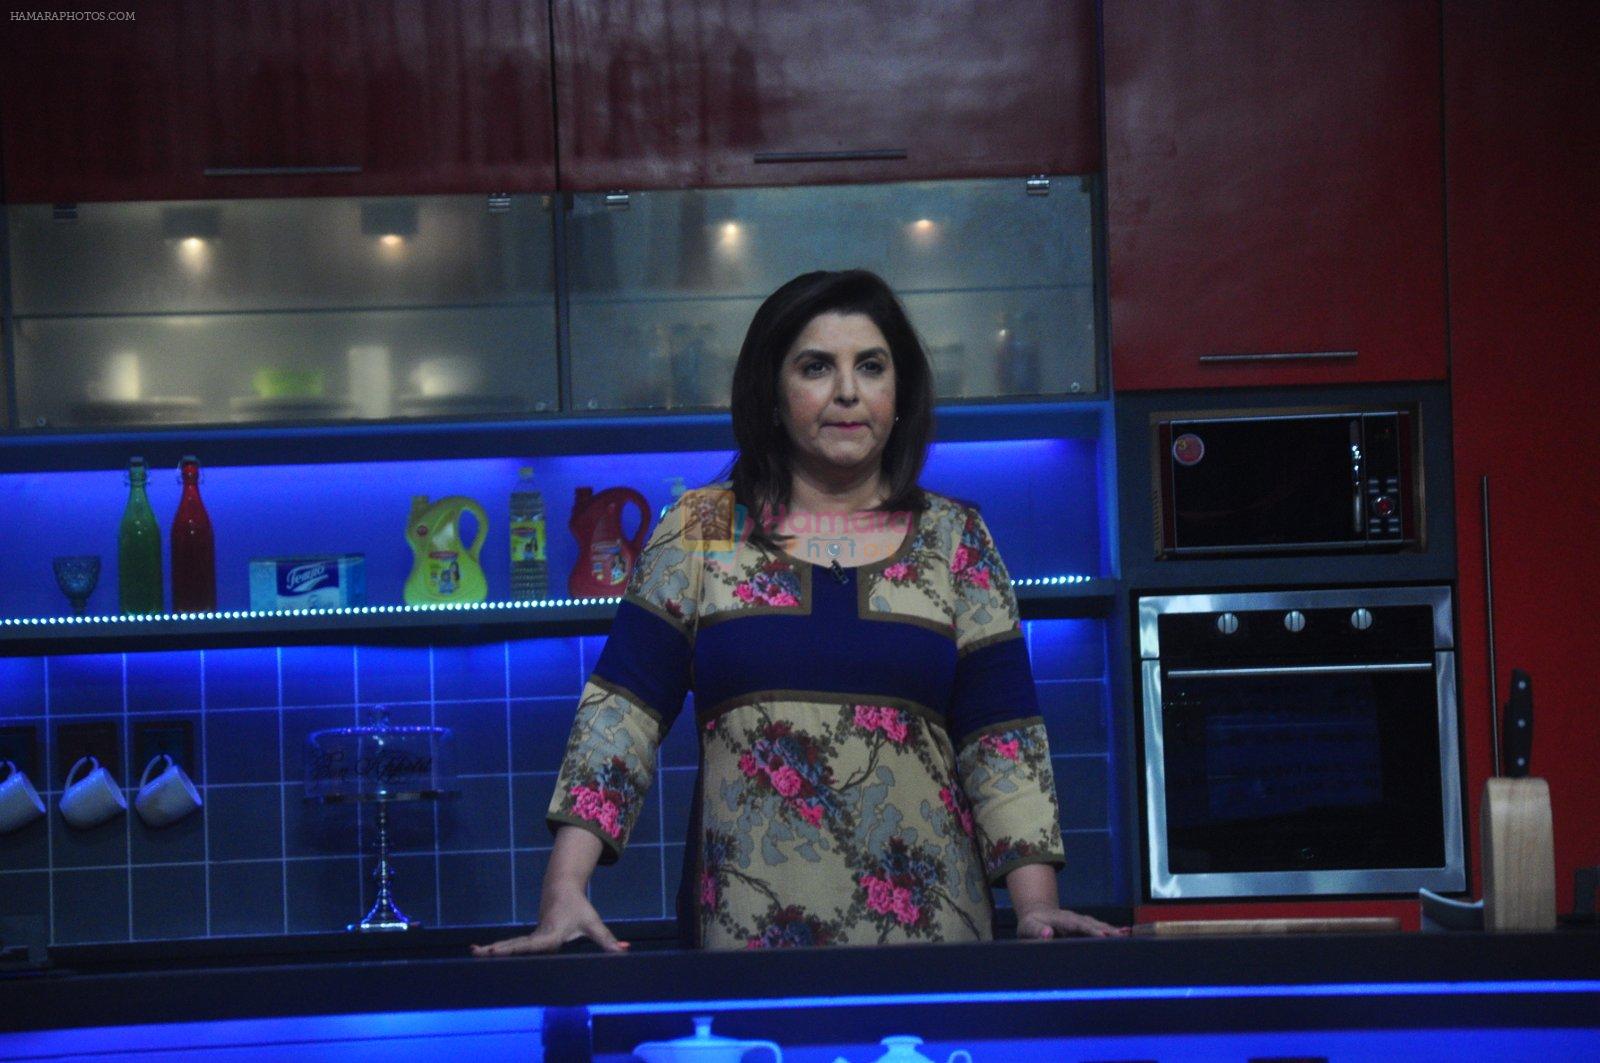 Arjun Kapoor cooks for Farah Ki Daawat in Mumbai on 4th March 2015